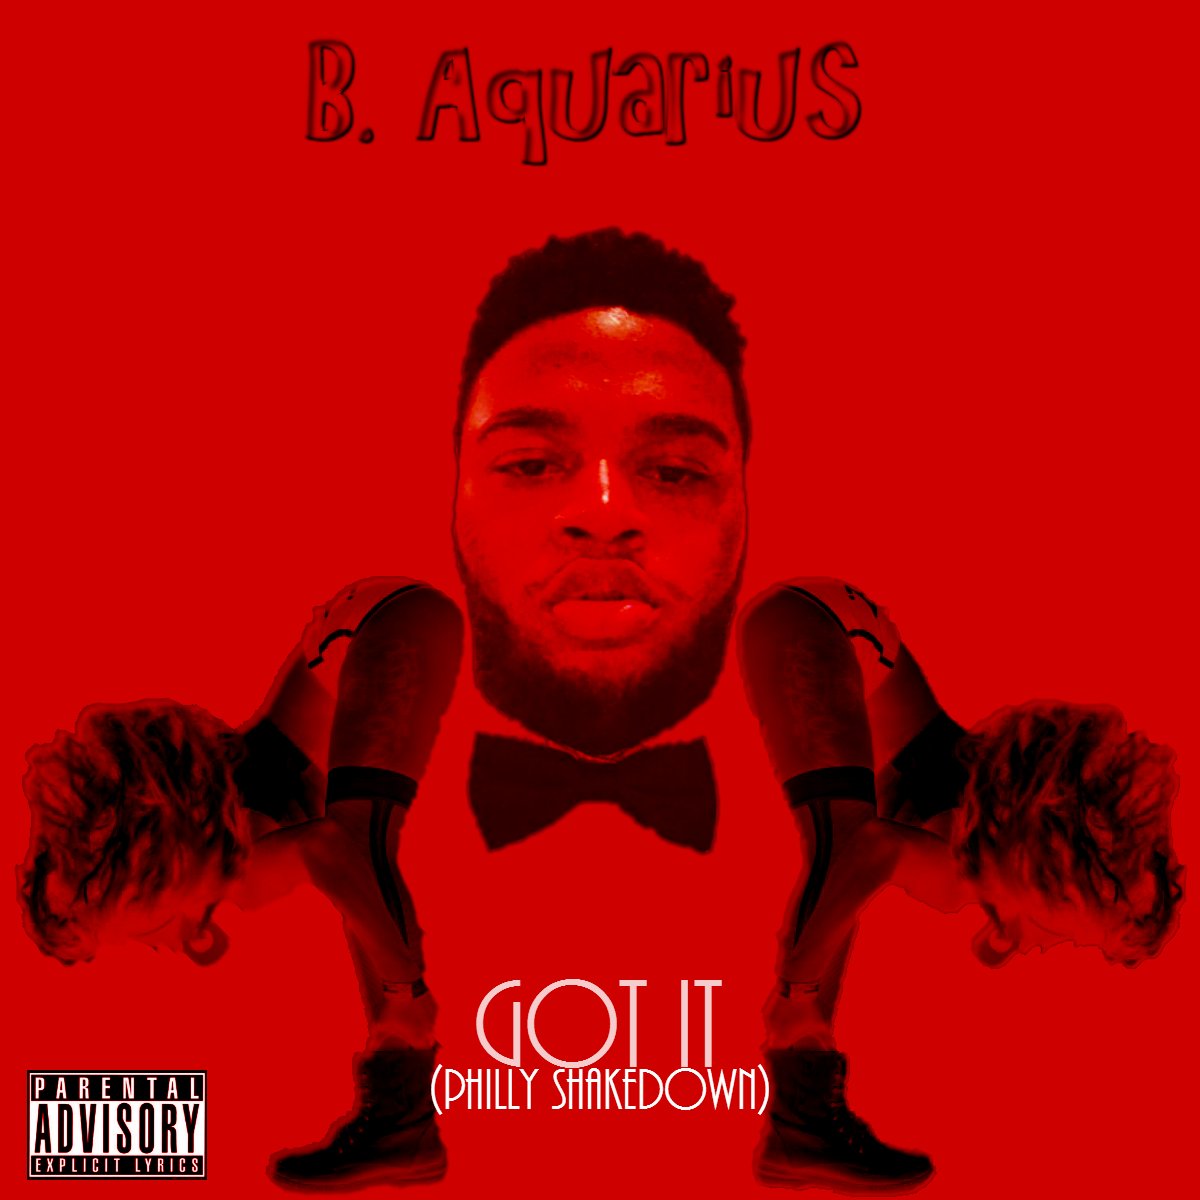 Meet B. Aquarius  New Orleans Bounce rapper, singer songwriter